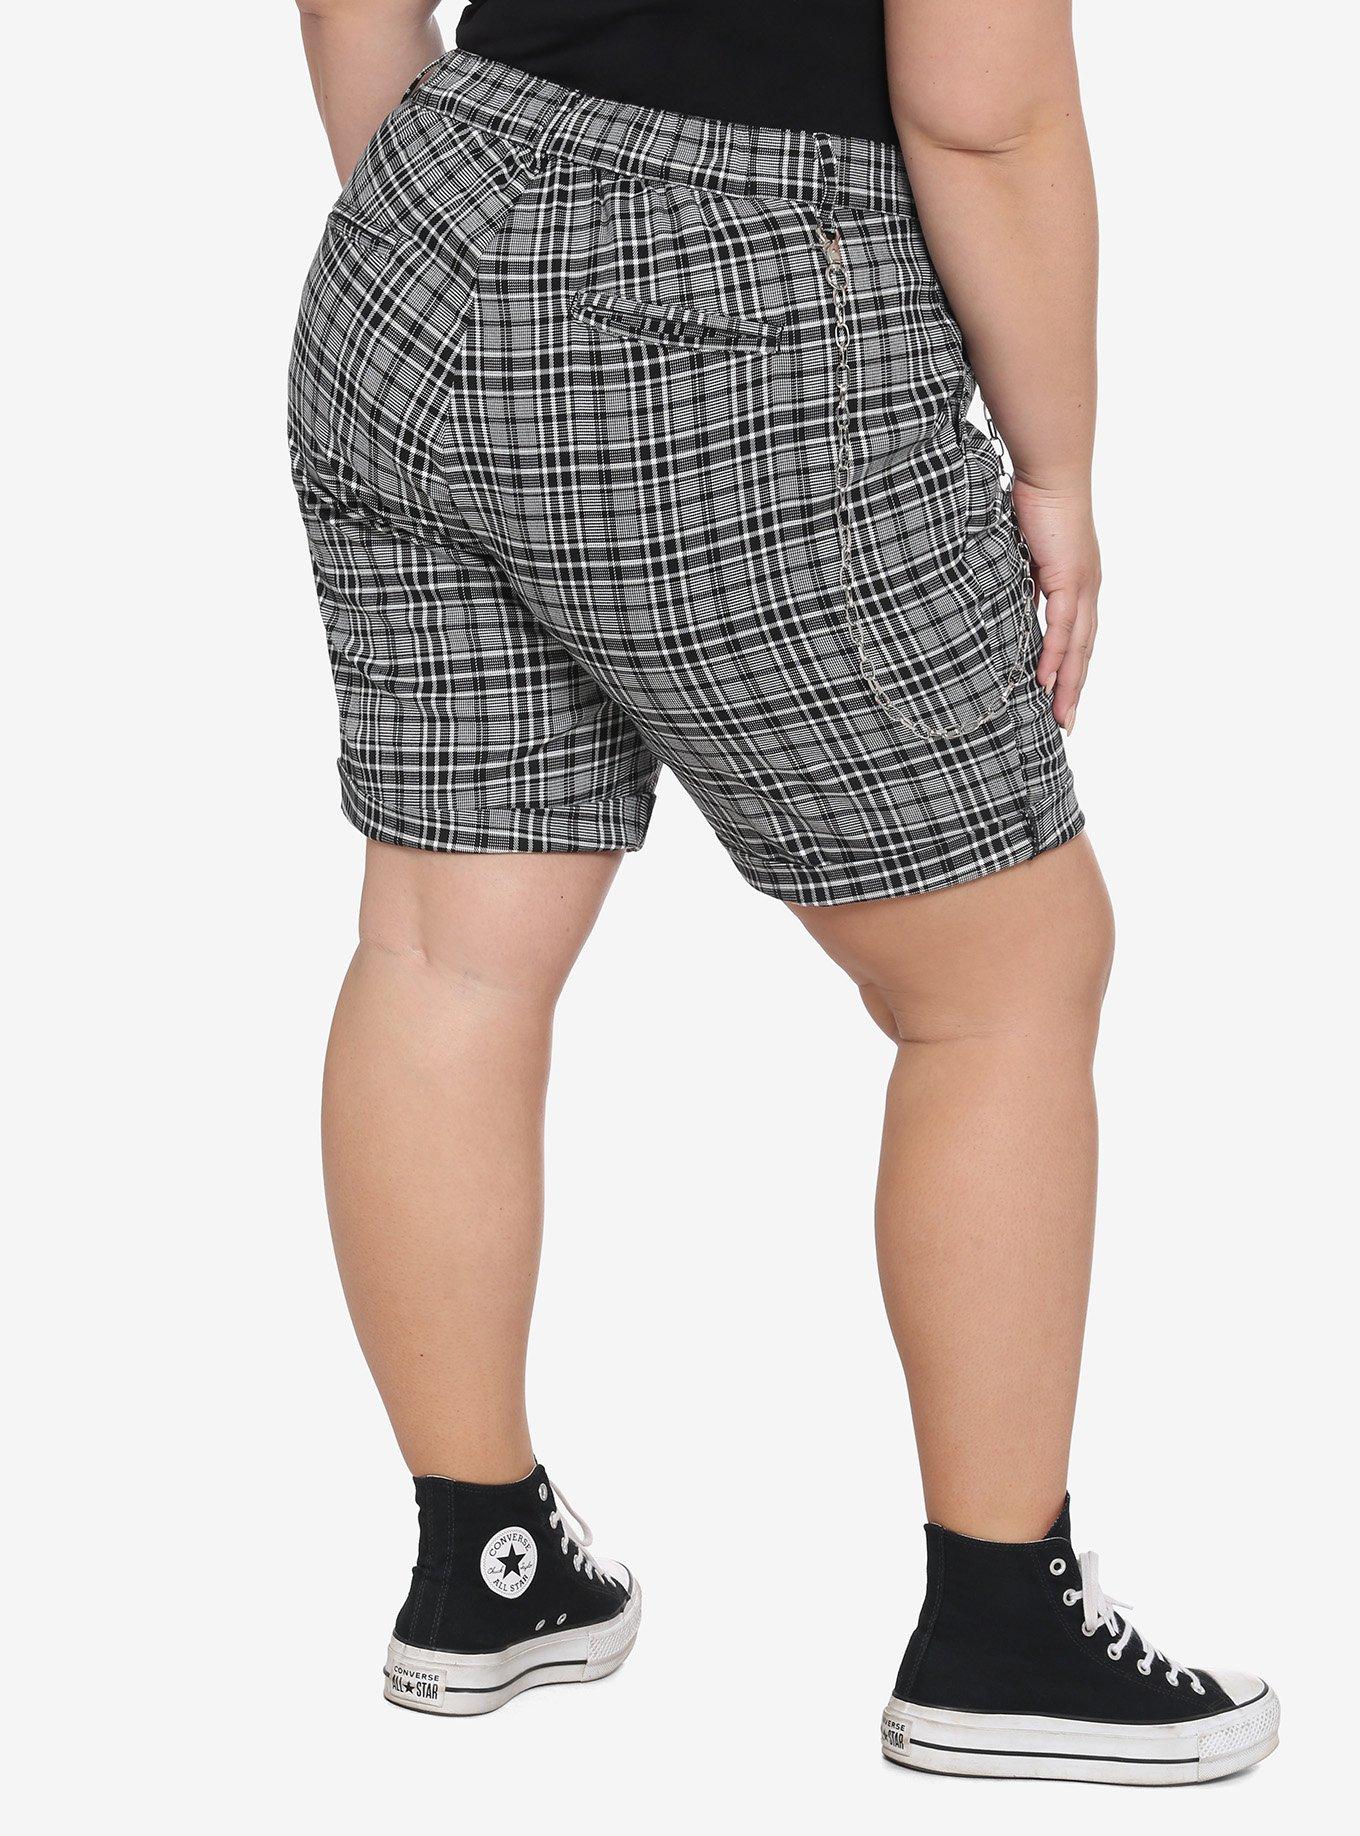 Black & White Plaid Bermuda Shorts With Detachable Chain Plus Size, PLAID, alternate